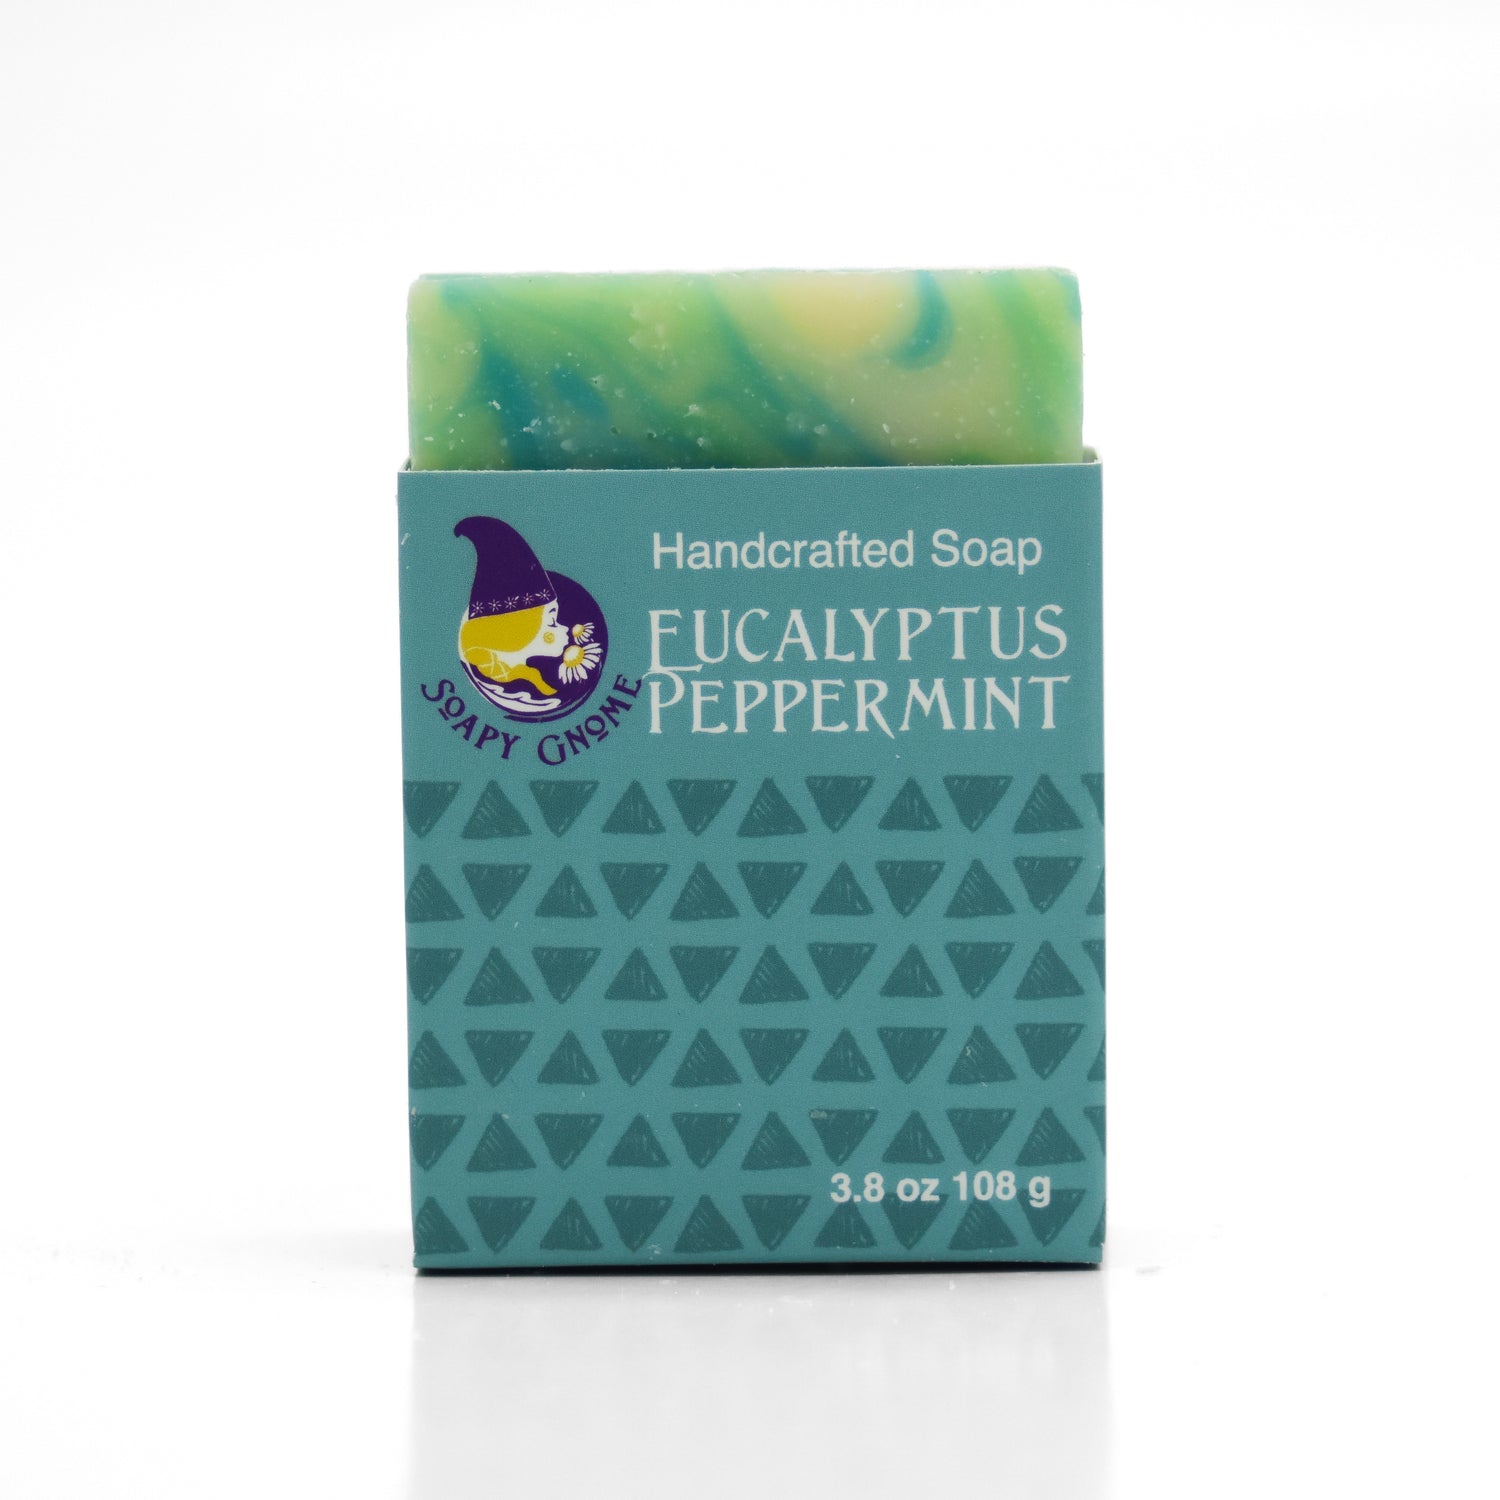 Eucalyptus Peppermint Body Soap Set of 6